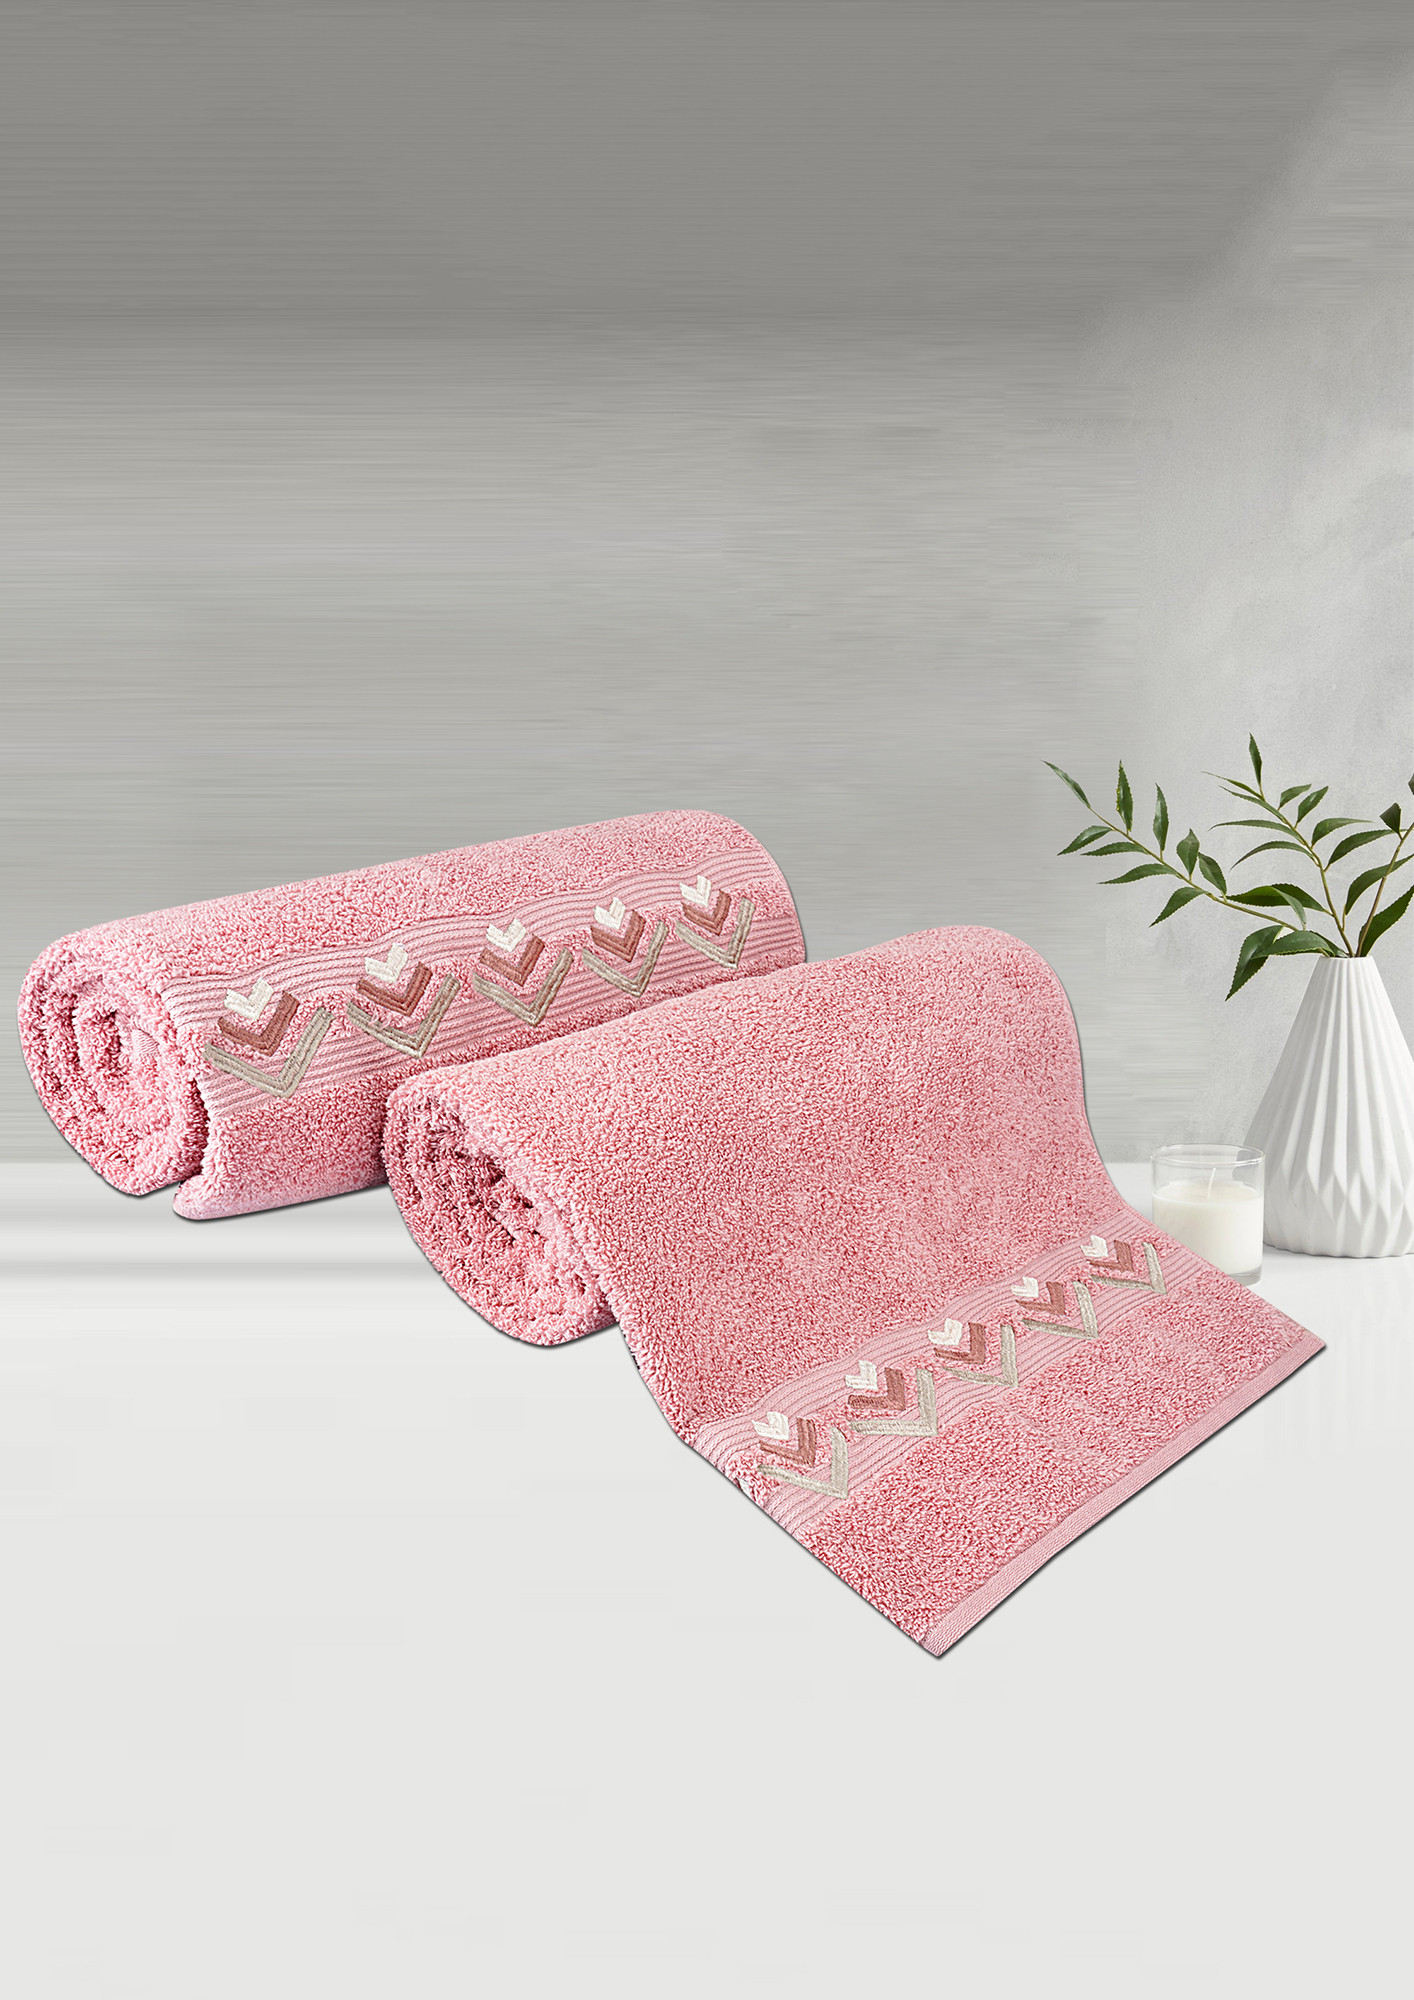 LUSH & BEYOND Bath Towel Set of 2, 100% Cotton Towel for Men & Women 500  GSM Towel